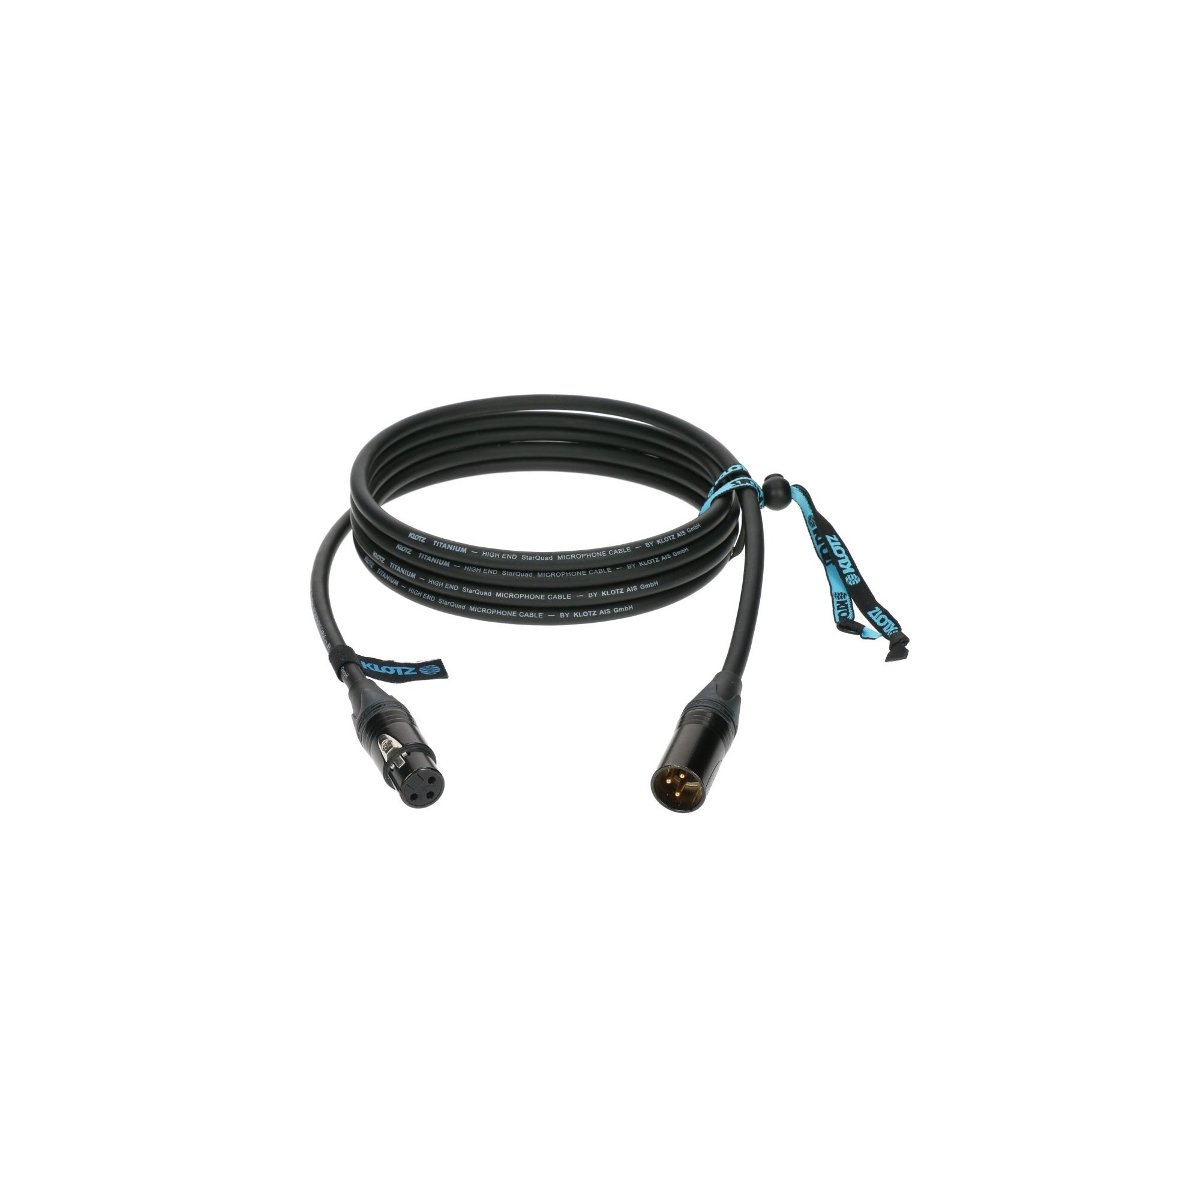 Klotz TI-M0300 profesjonalny kabel mikrofonowy hi-end serii Titanium 3m